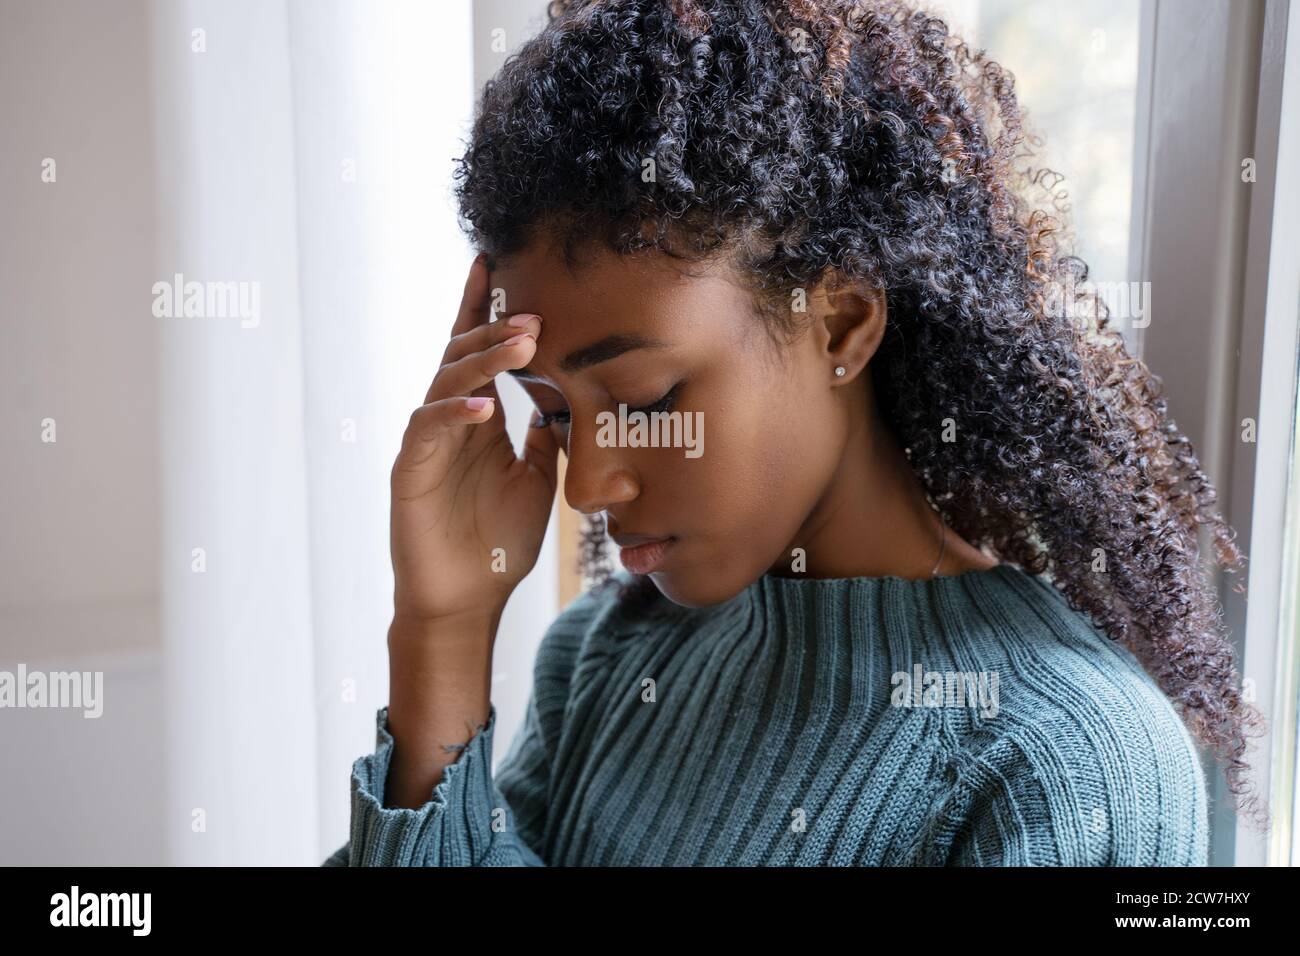 Black girl suffering for negative feelings portrait Stock Photo